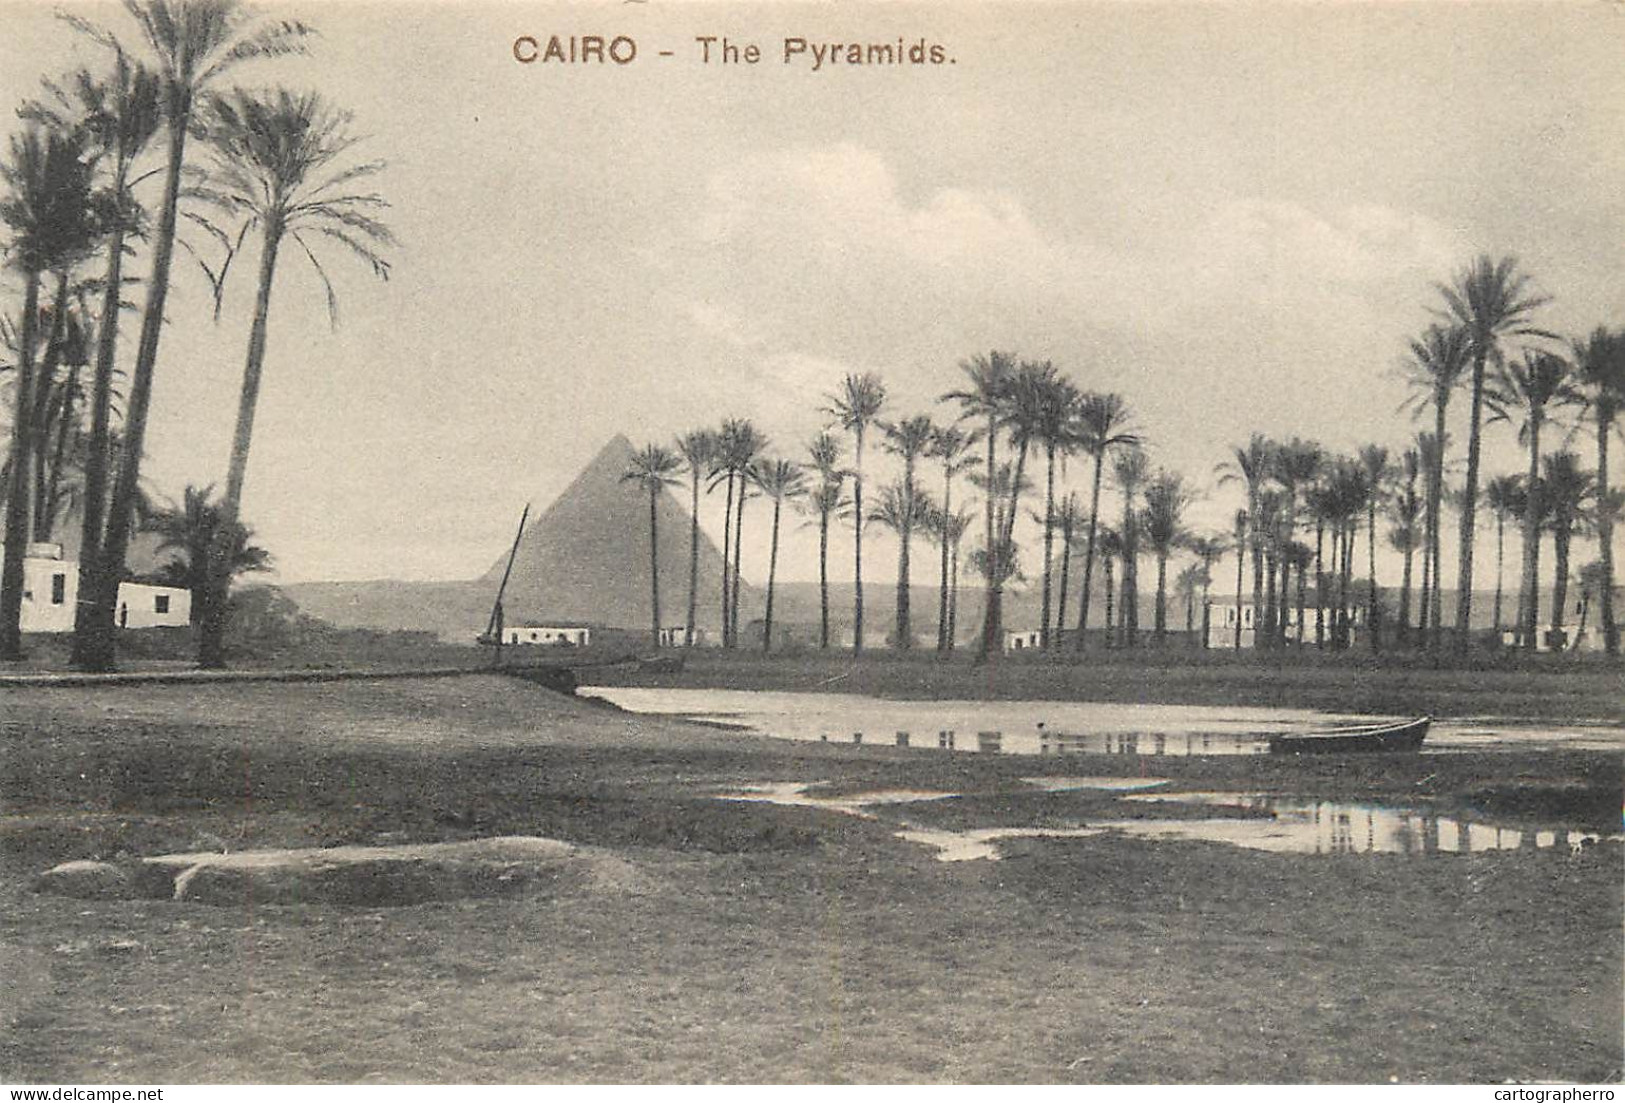 Postcard Egypt Cairo The Pyramids Of Guizeh - Piramidi